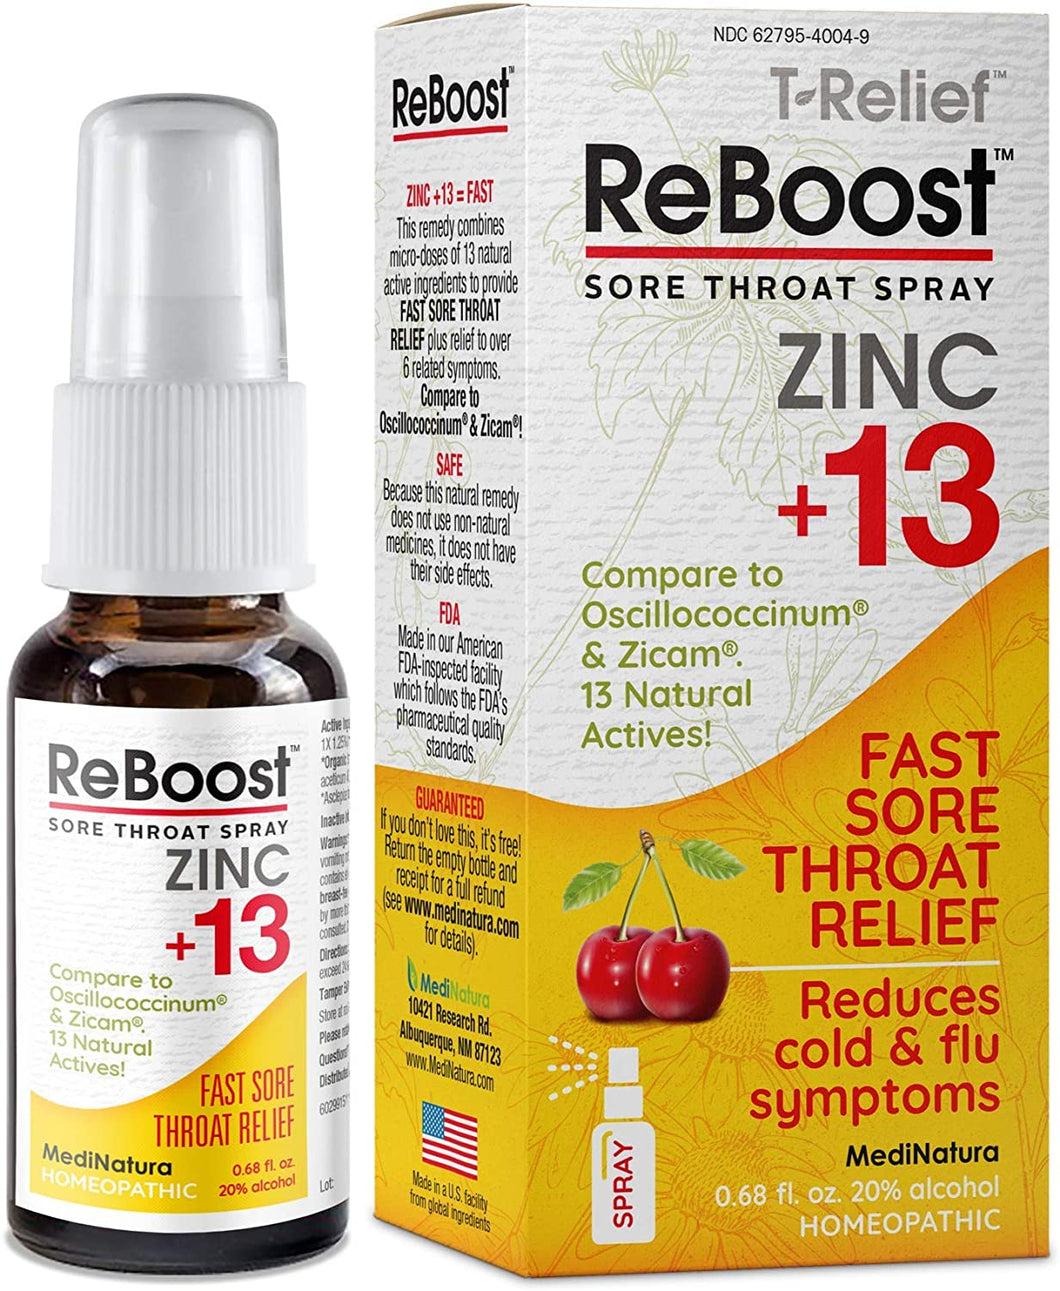 Reboost Throat Spray Zinc+13 Cherry 0.68 fl oz Spray by MediNatura